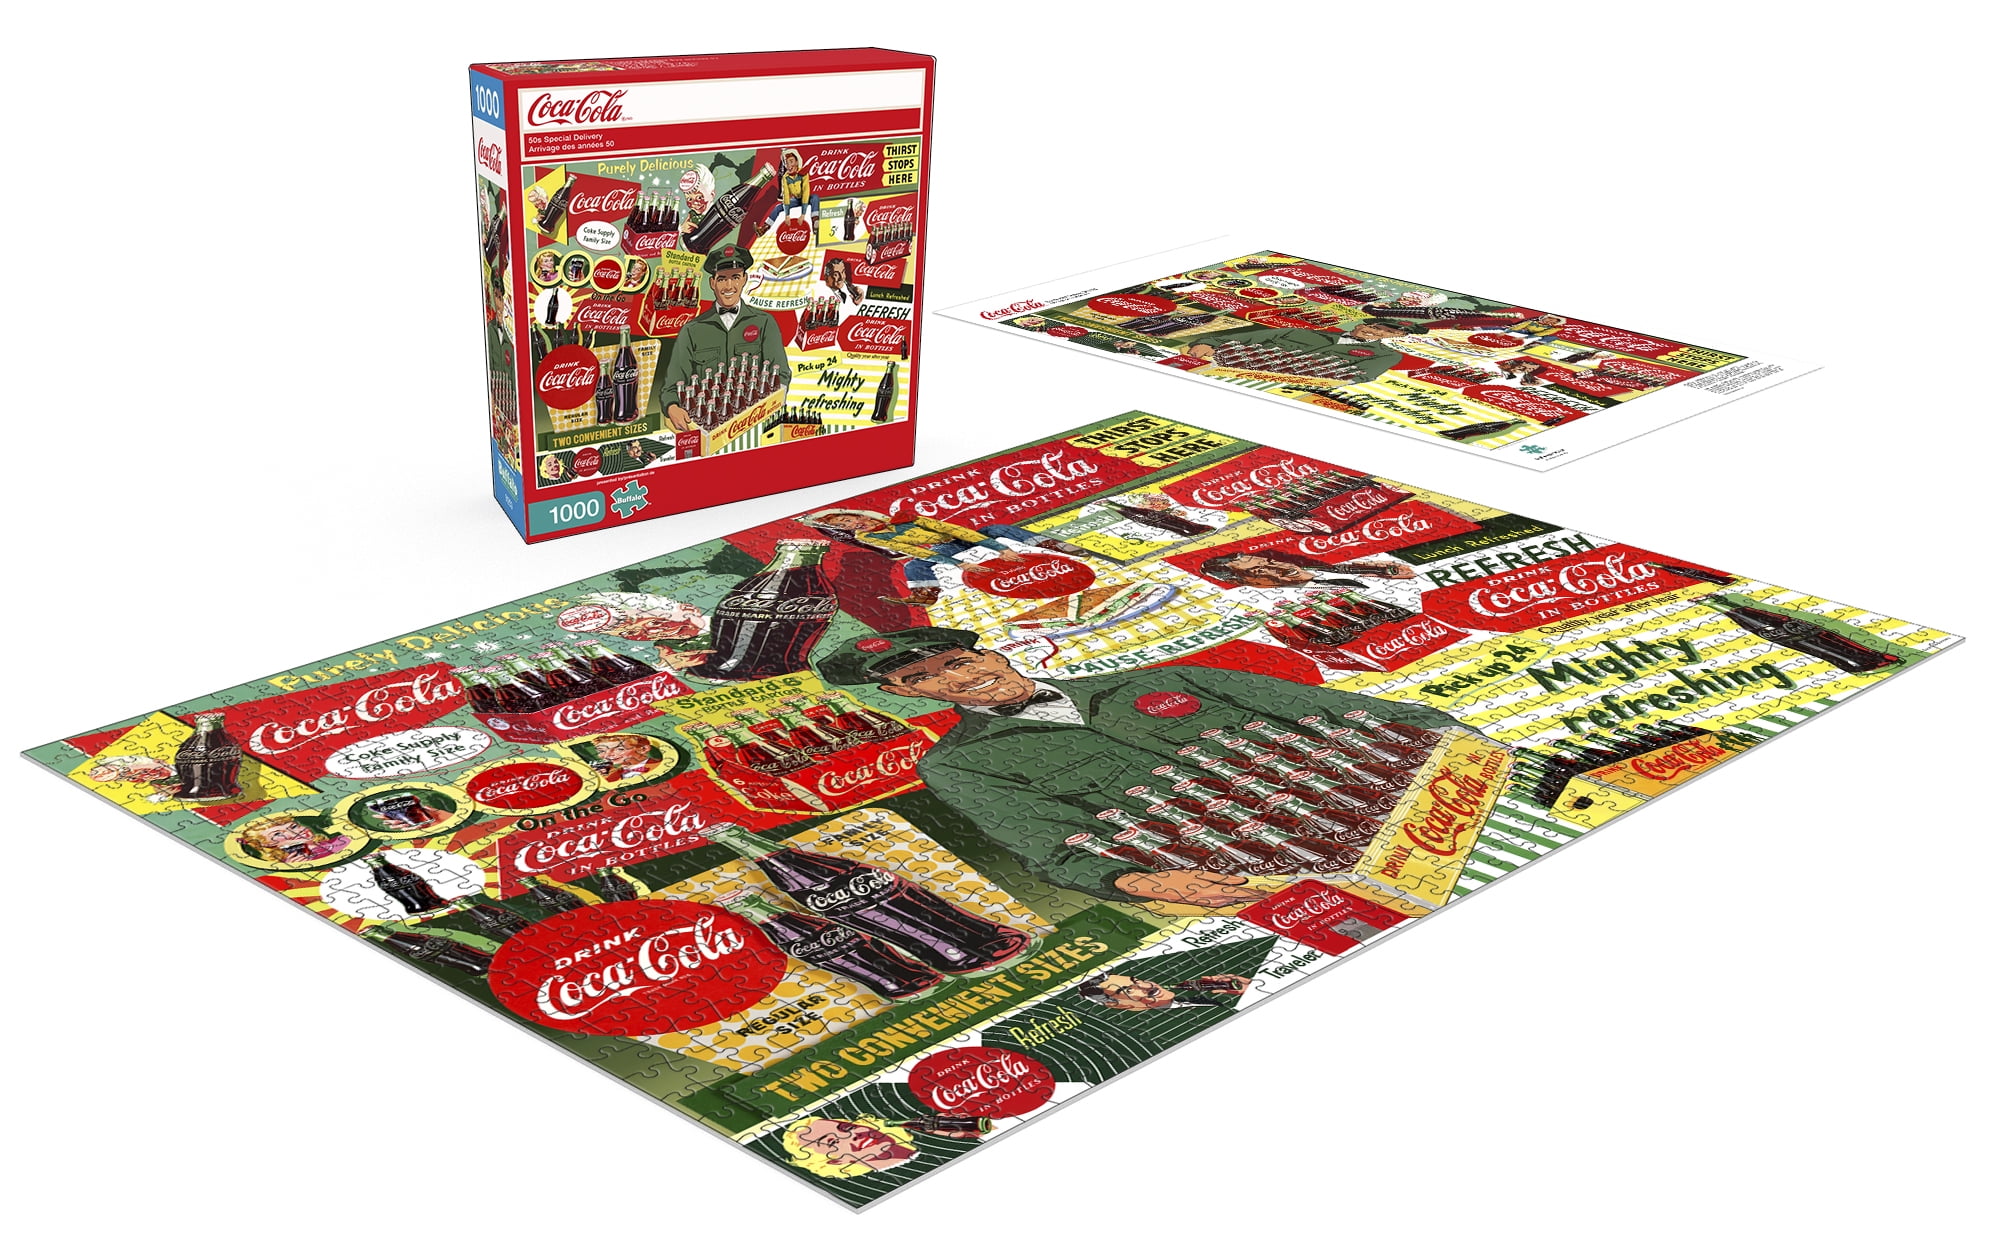 50s Special Delivery Coca-Cola 1000 Piece Jigsaw Puzzle Buffalo Games